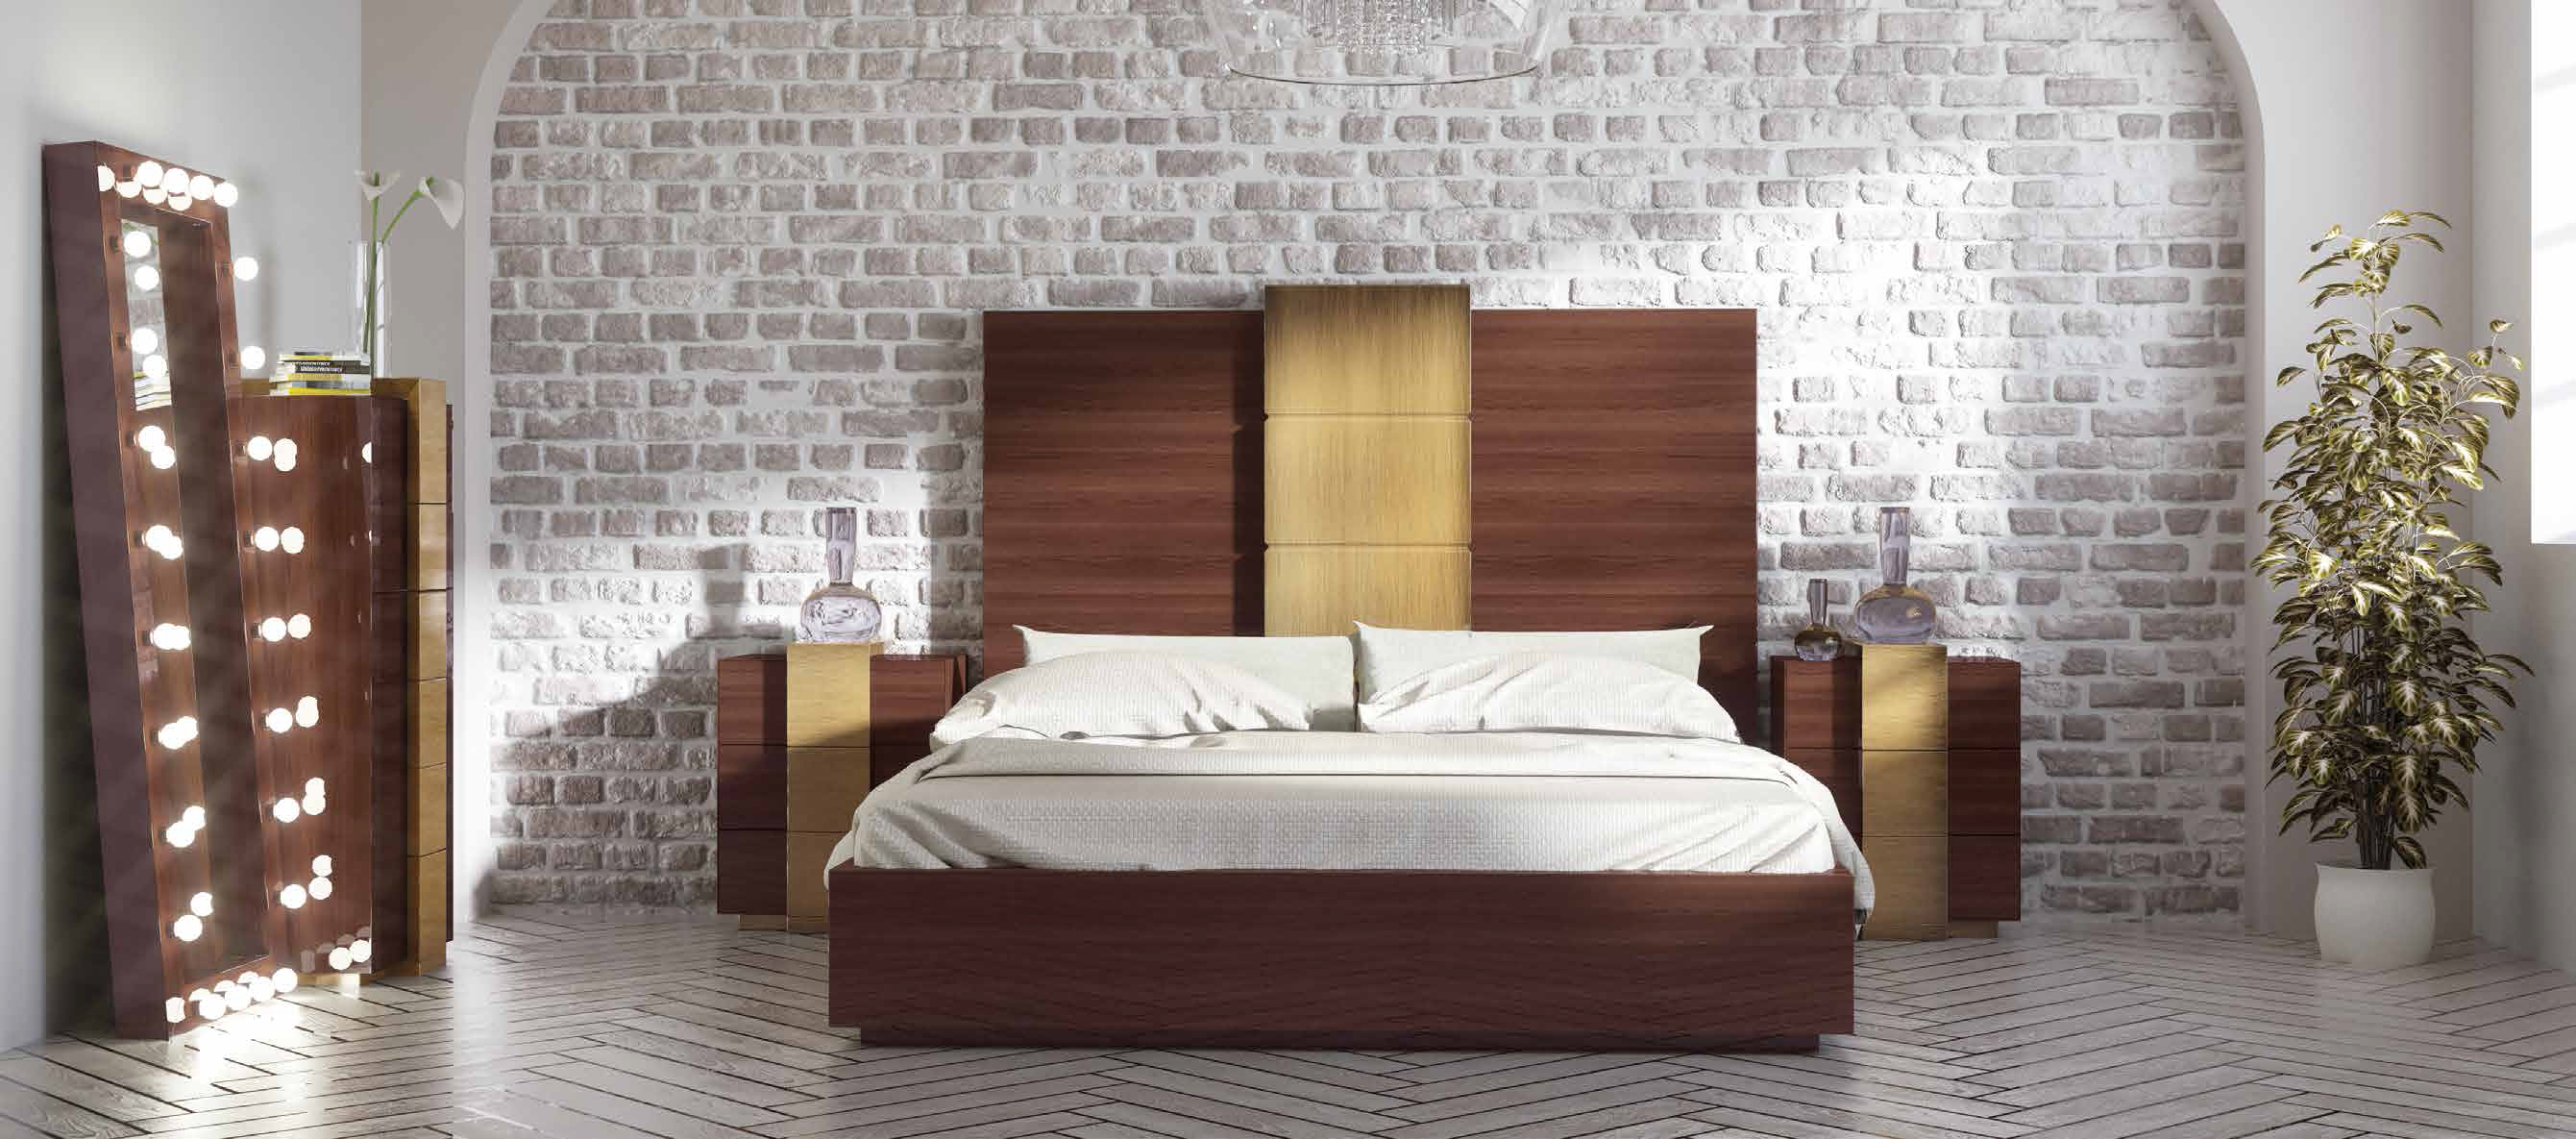 Brands Franco Furniture Bedrooms vol2, Spain DOR 13